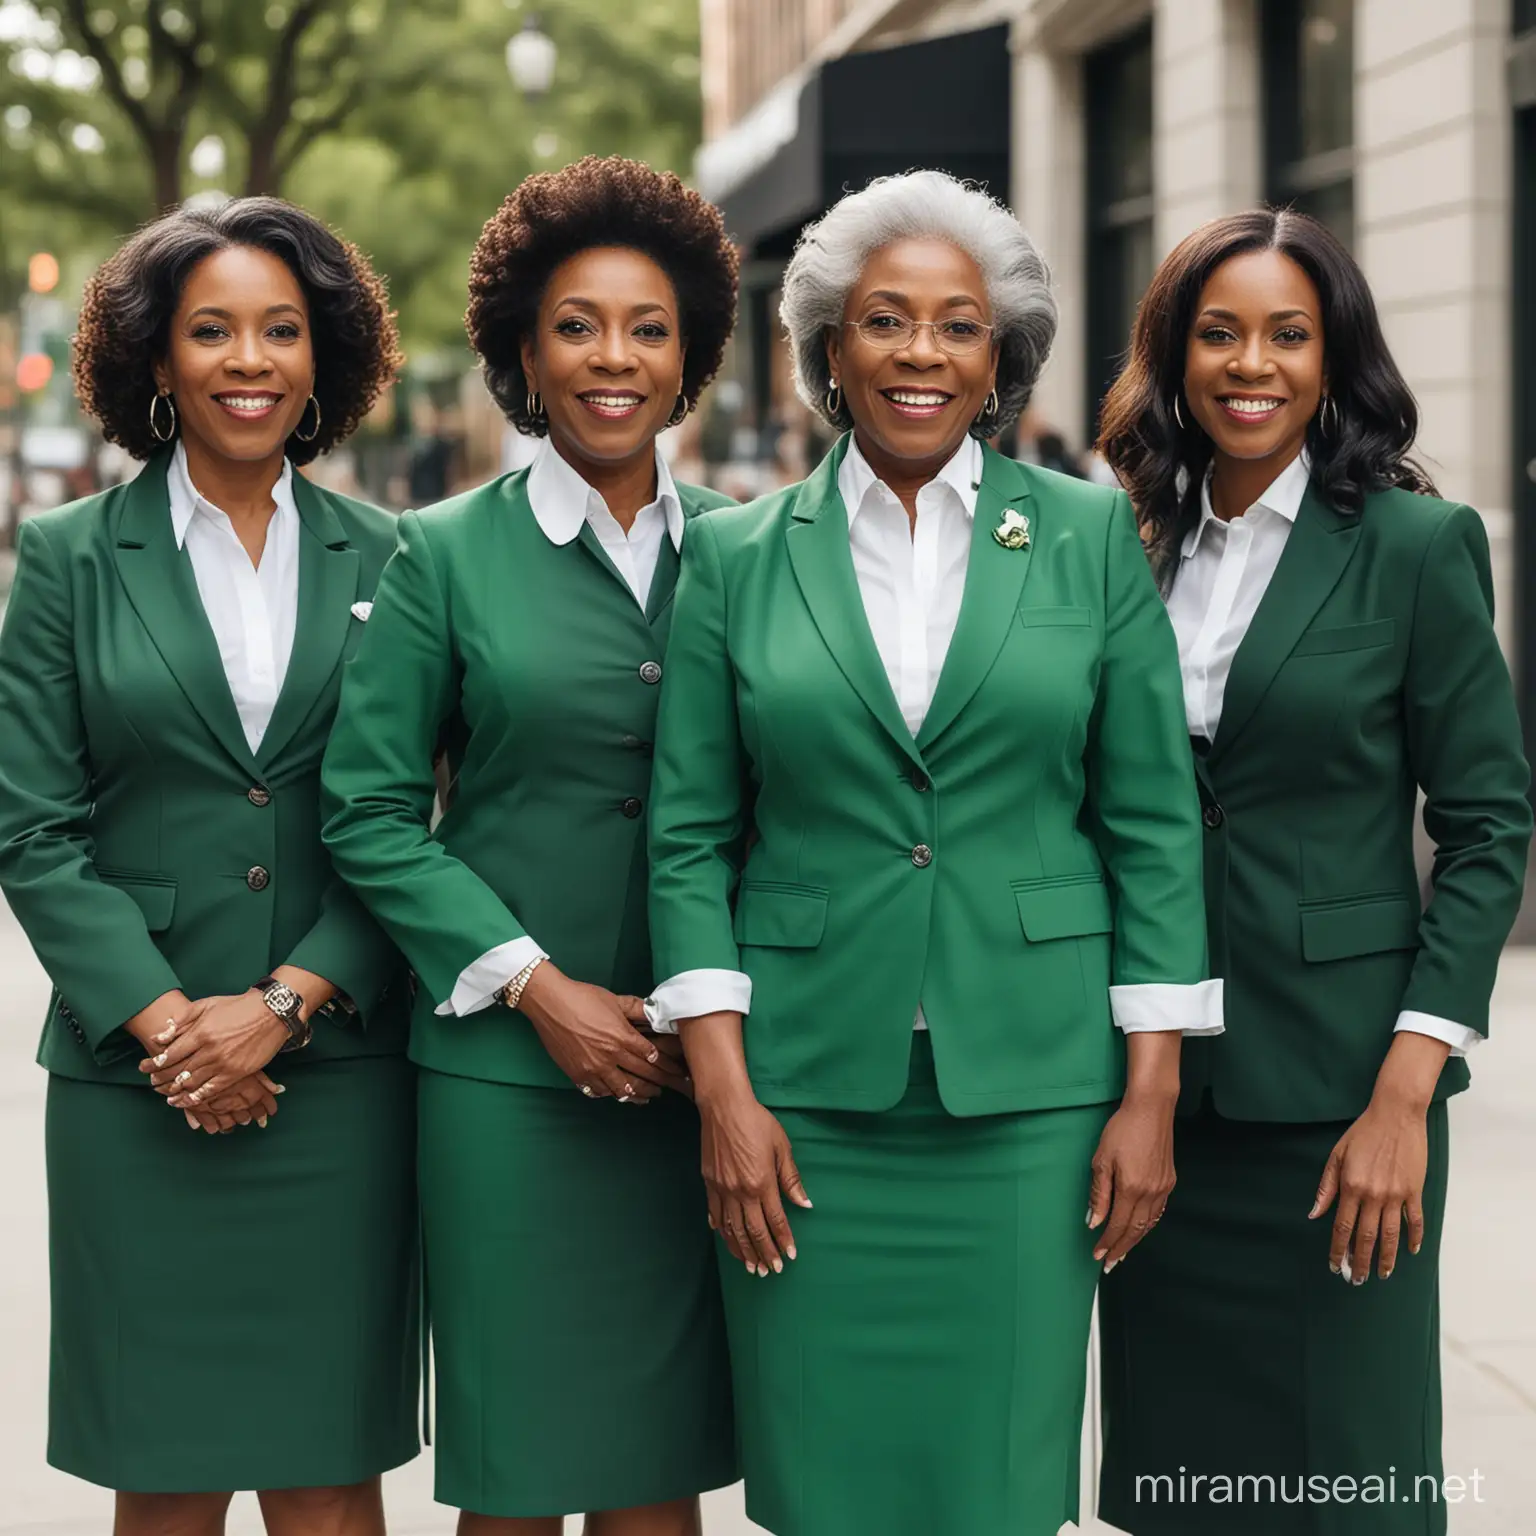 Older black women wearing emerald green and white professional attire. 